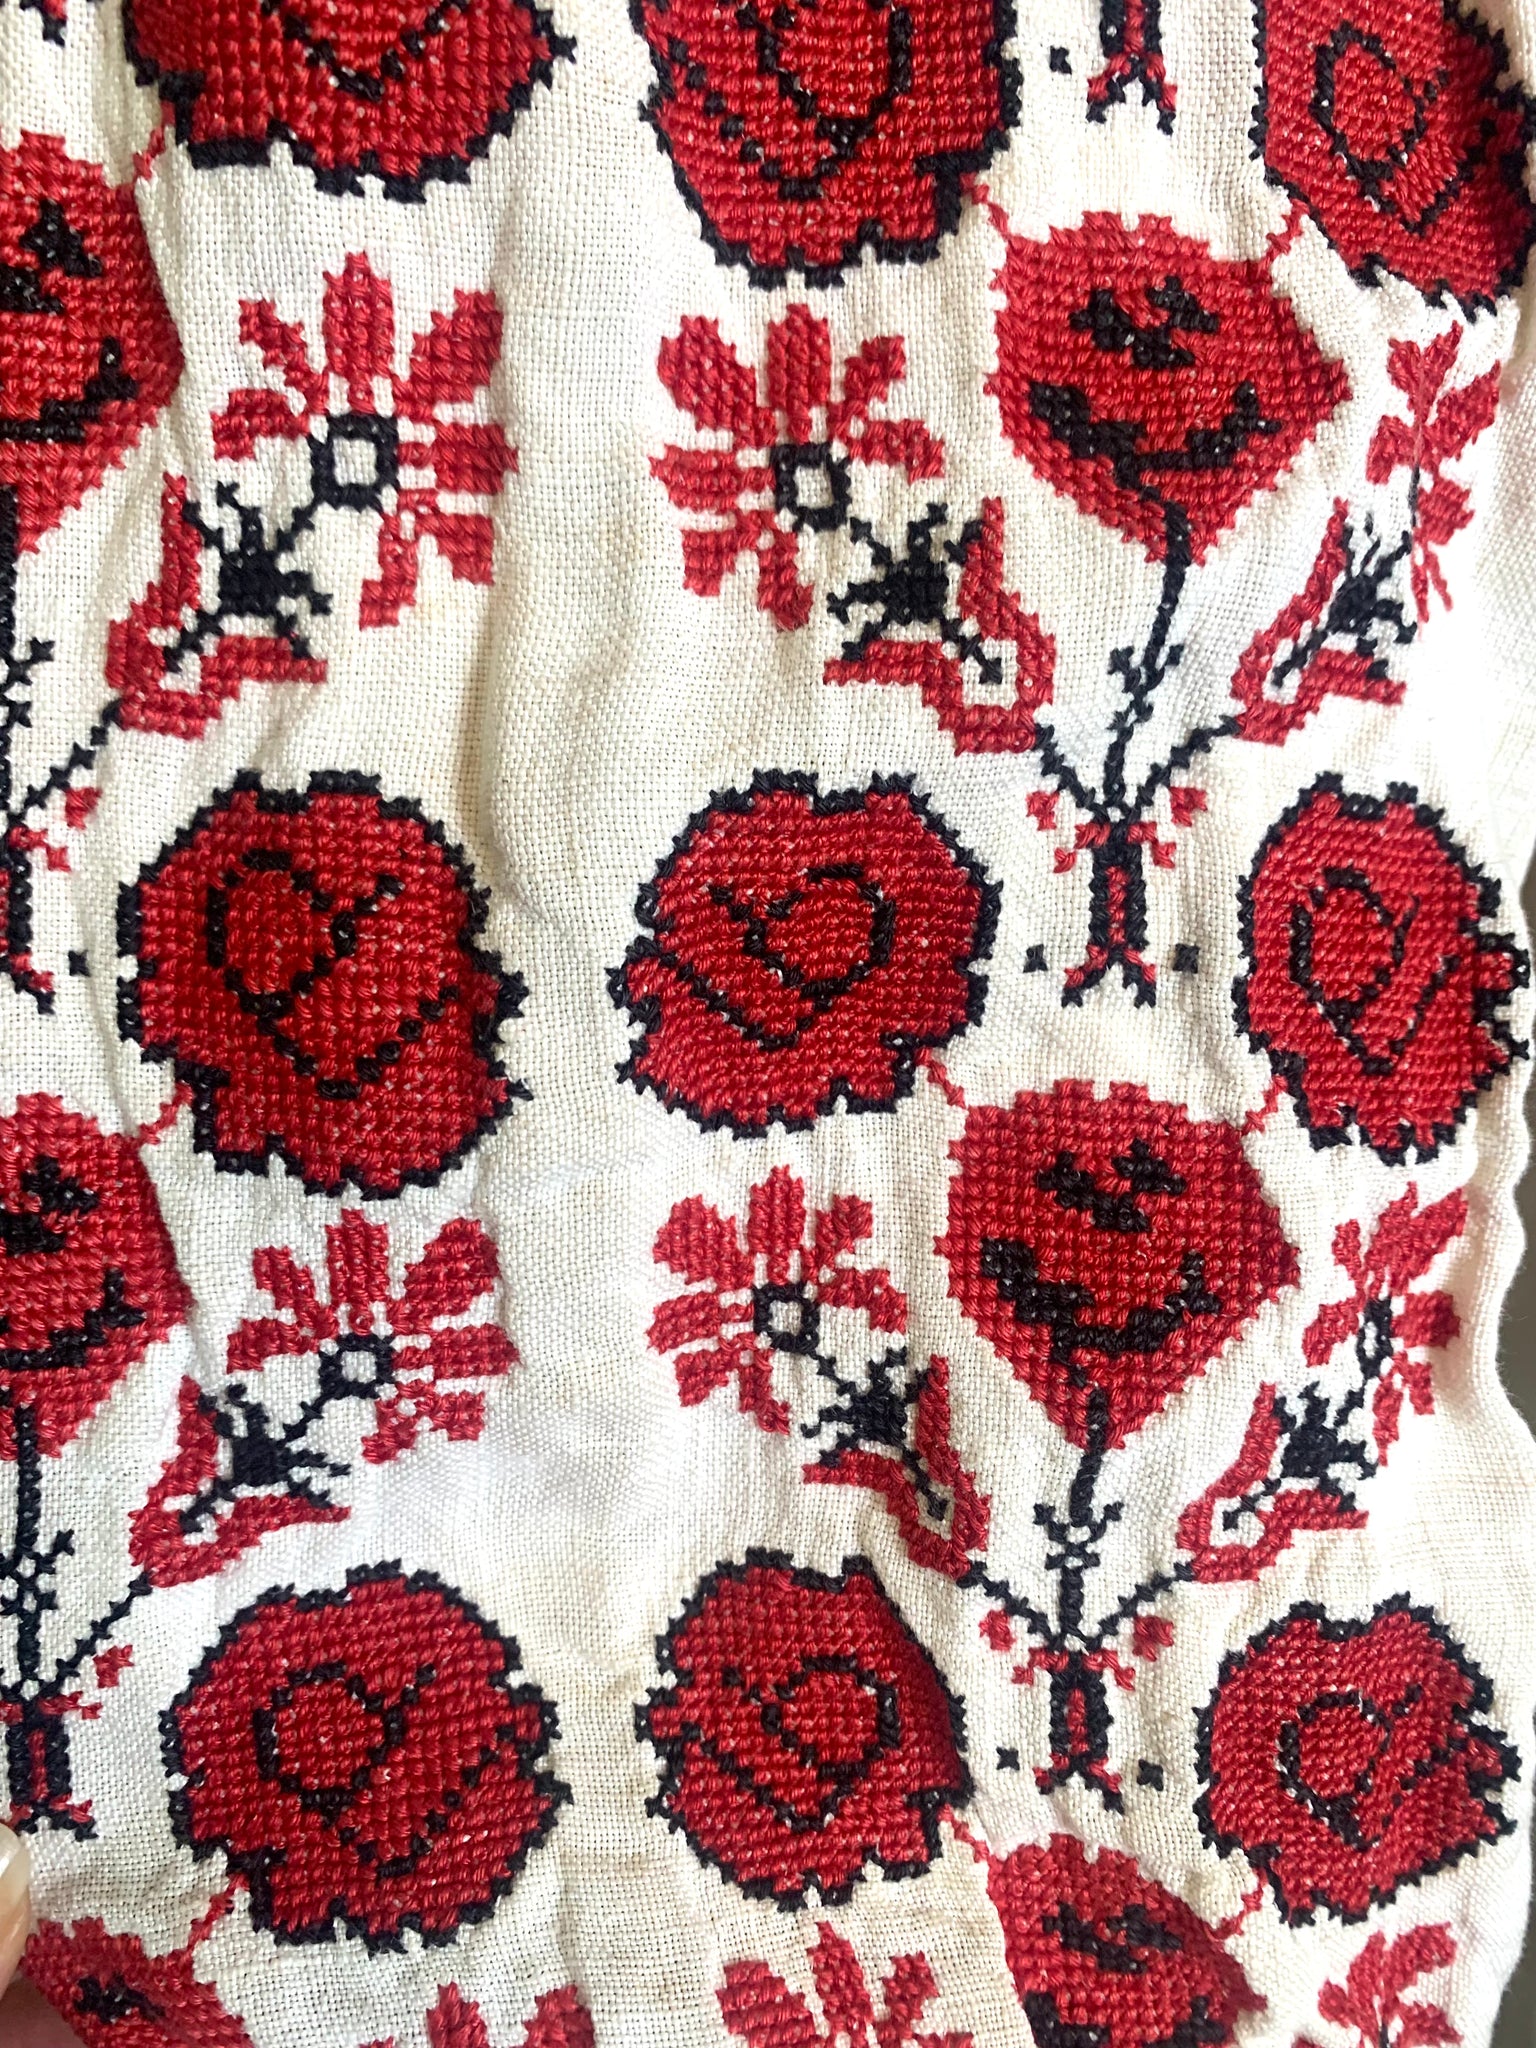  Traditonal Ukranian 1920s Red Cross Stitch Vyshyvanka Dress EMBROIDERY 4 of 6